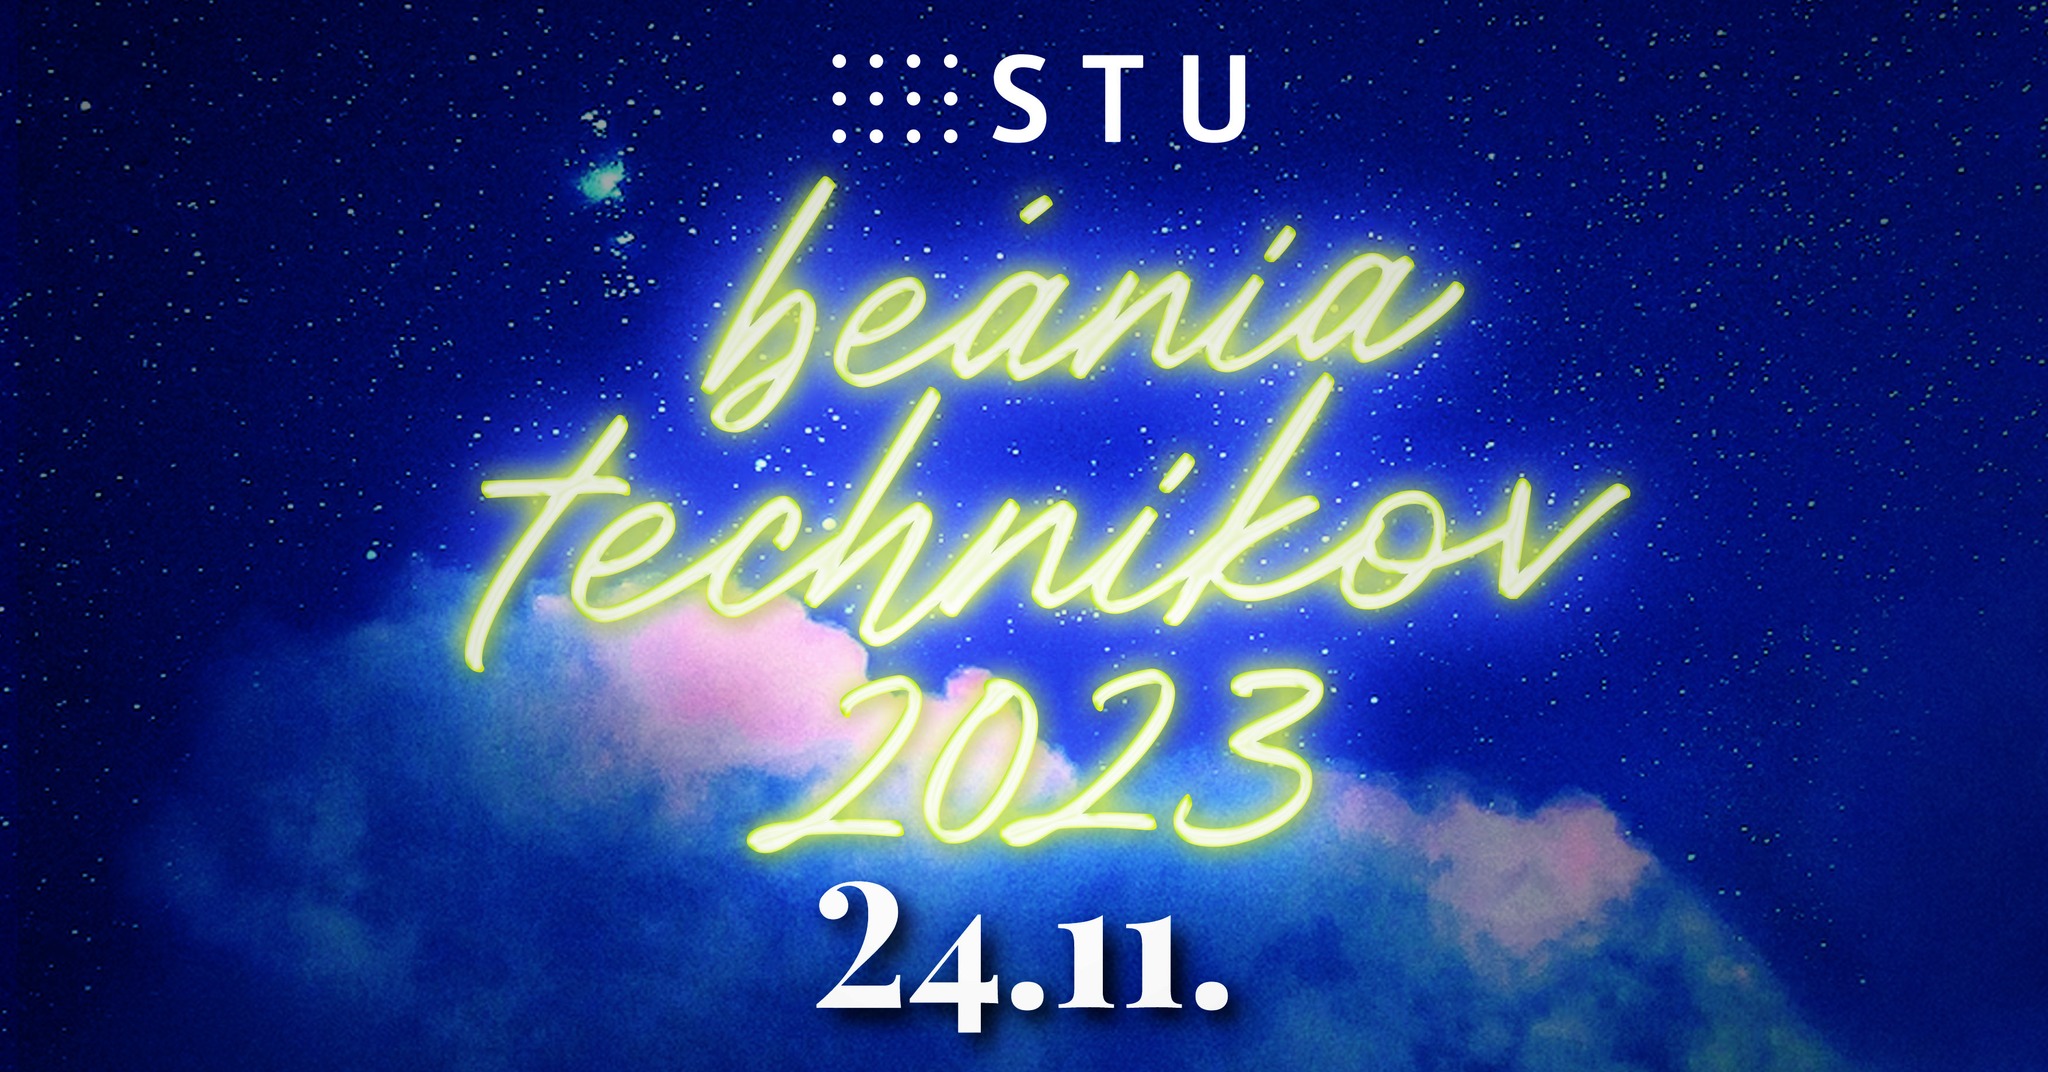 Benia technikov 2023 Bratislava